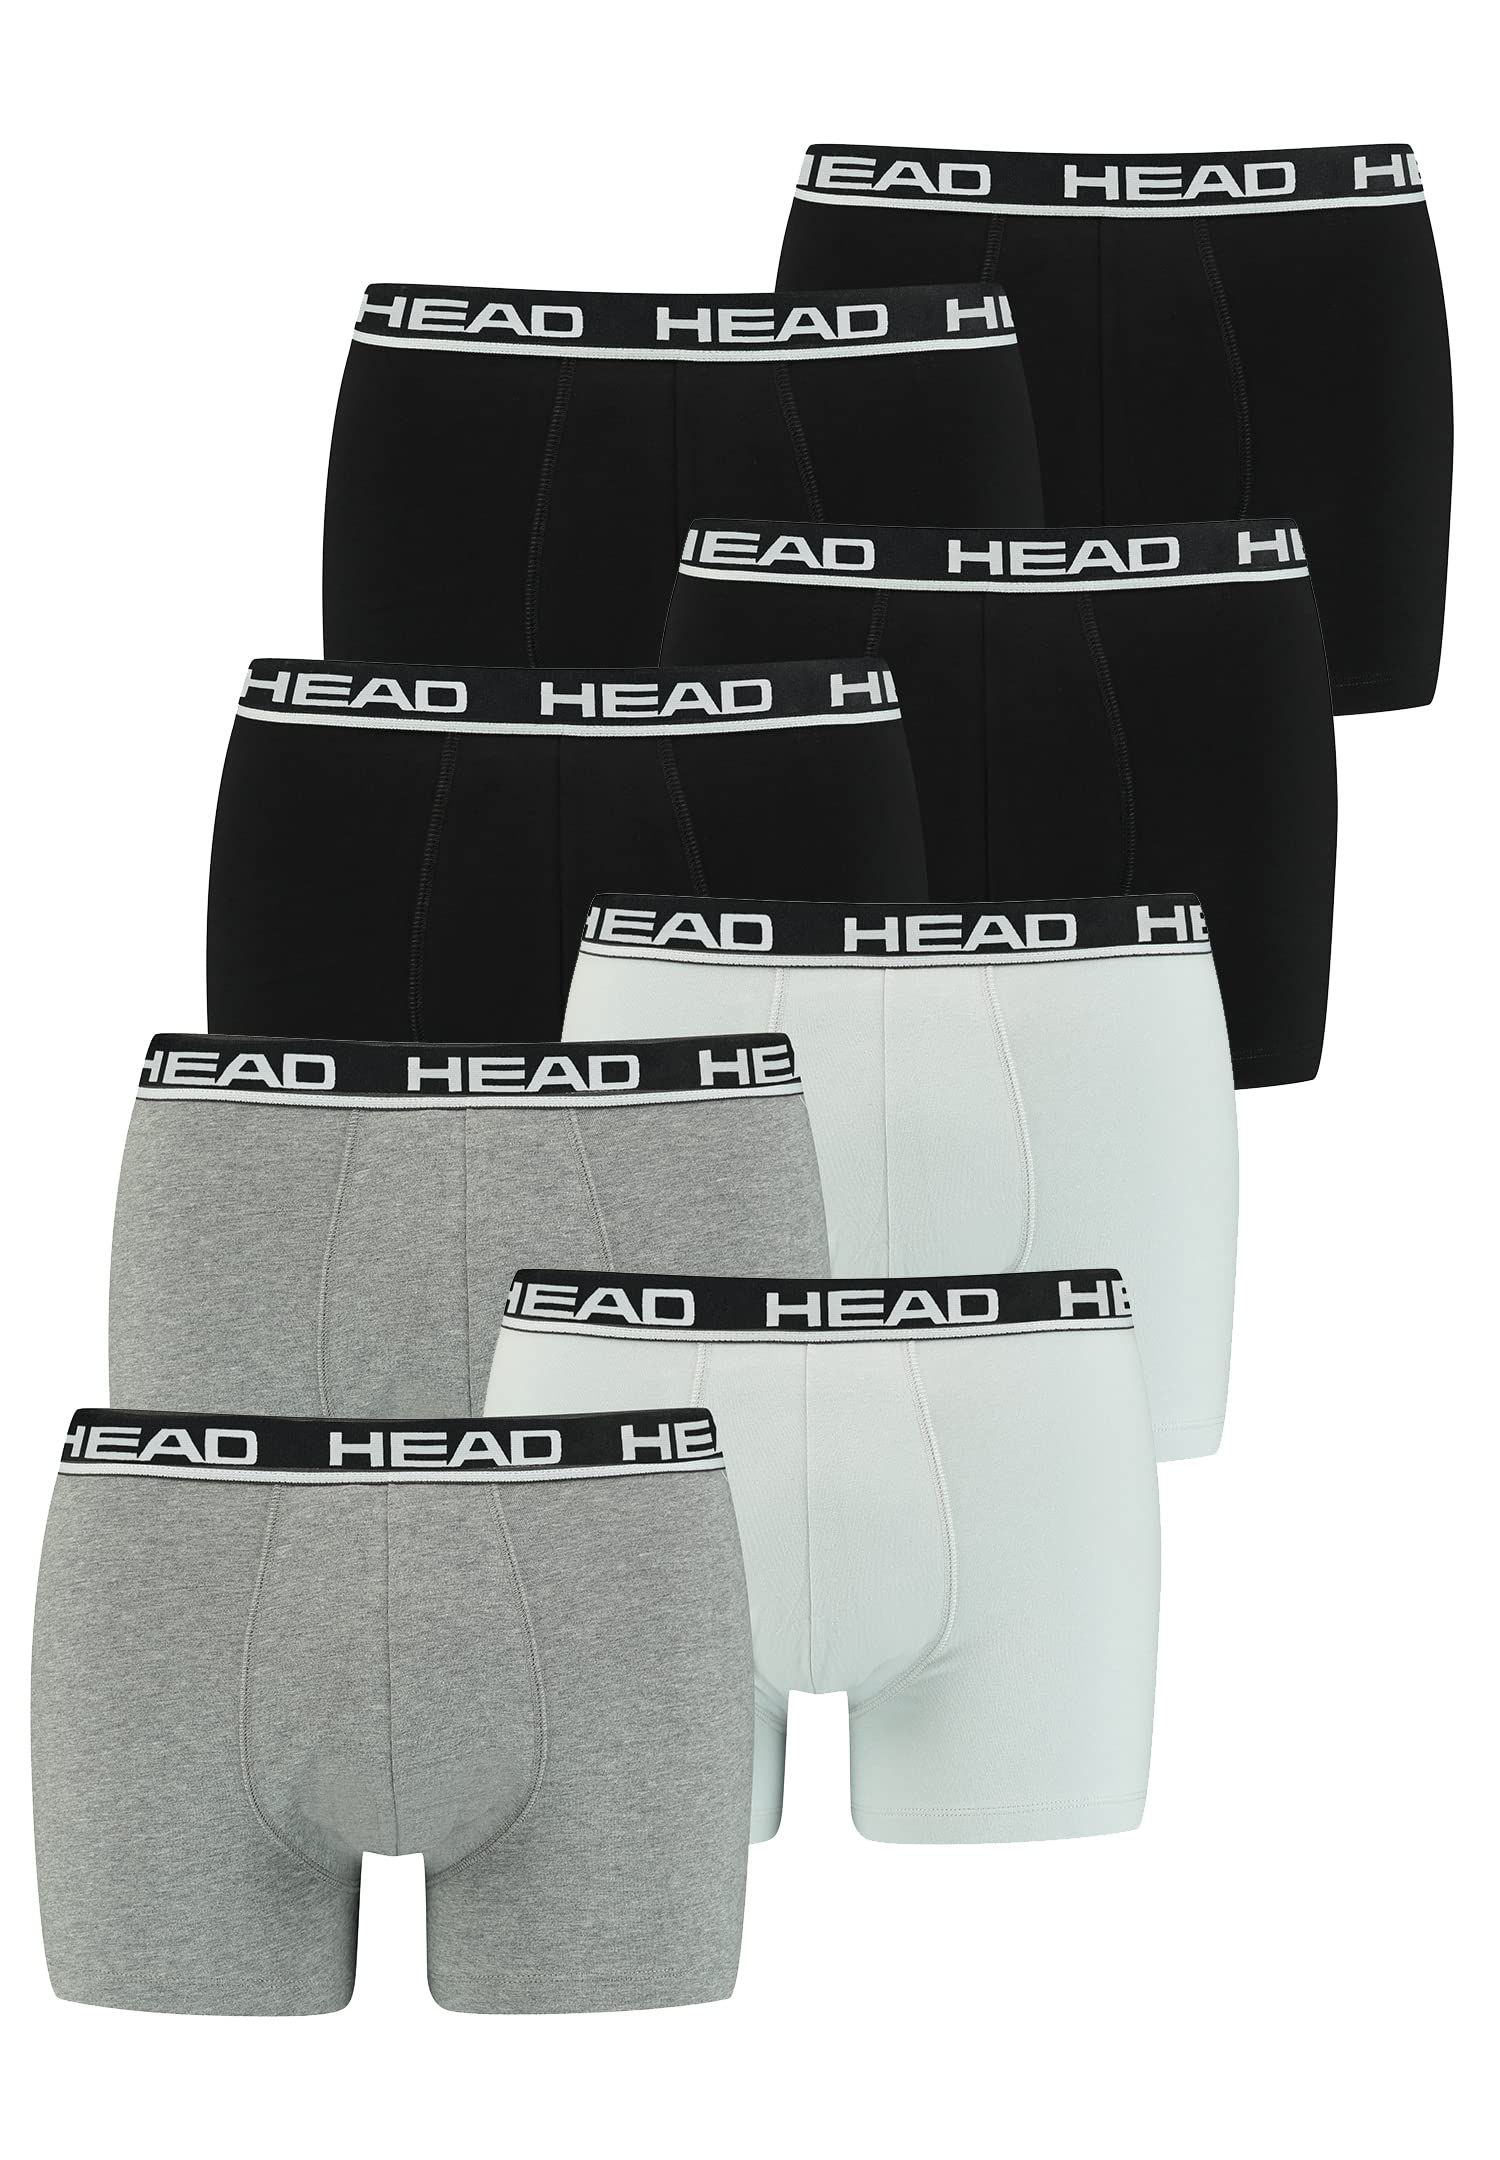 HEAD Herren Boxershorts Unterwäsche 8P (Black/Grey Combo, XL)